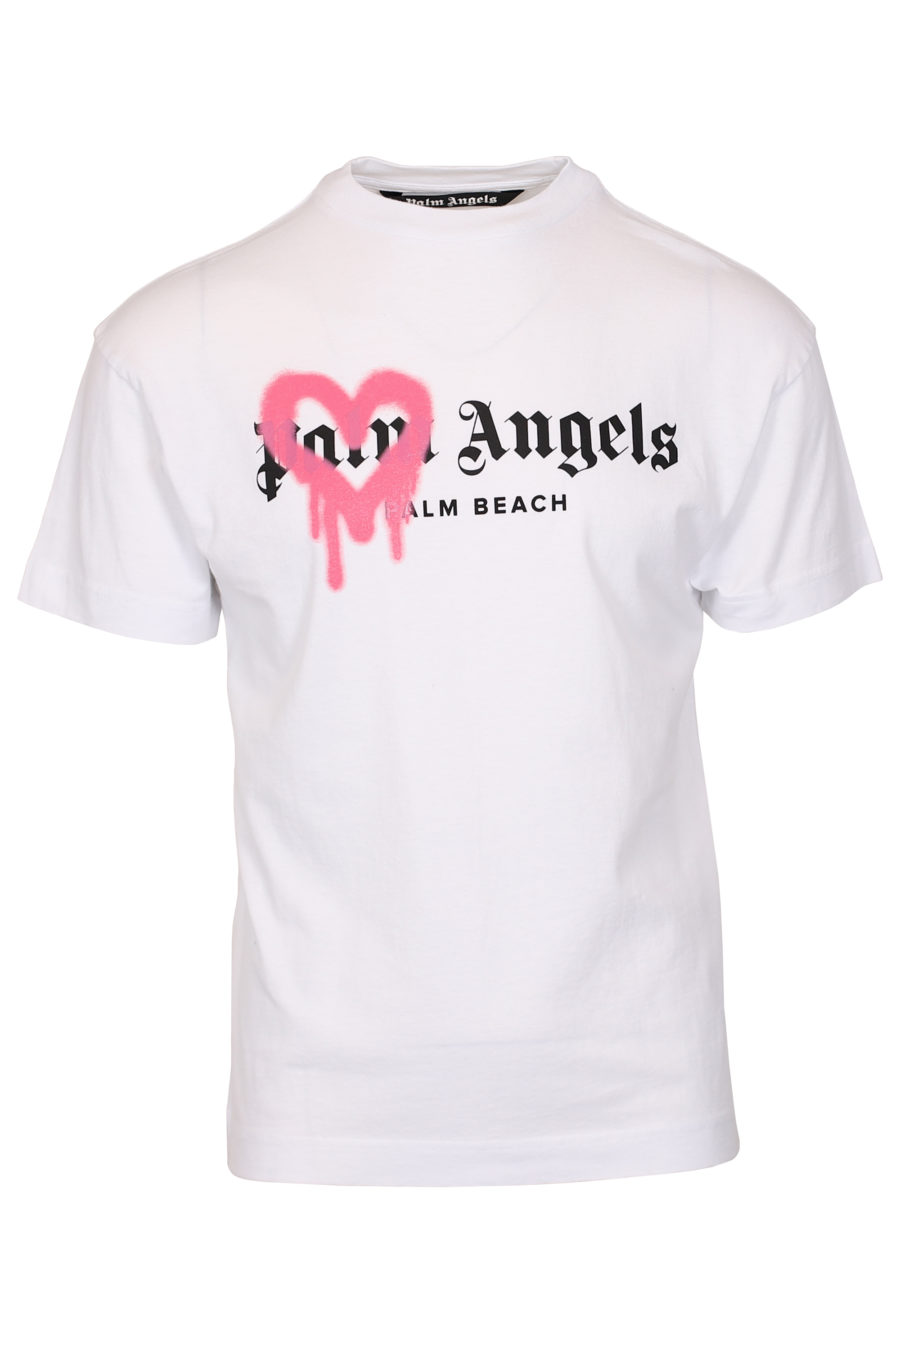 T-shirt blanc avec logo Palm Beach - IMG 1055